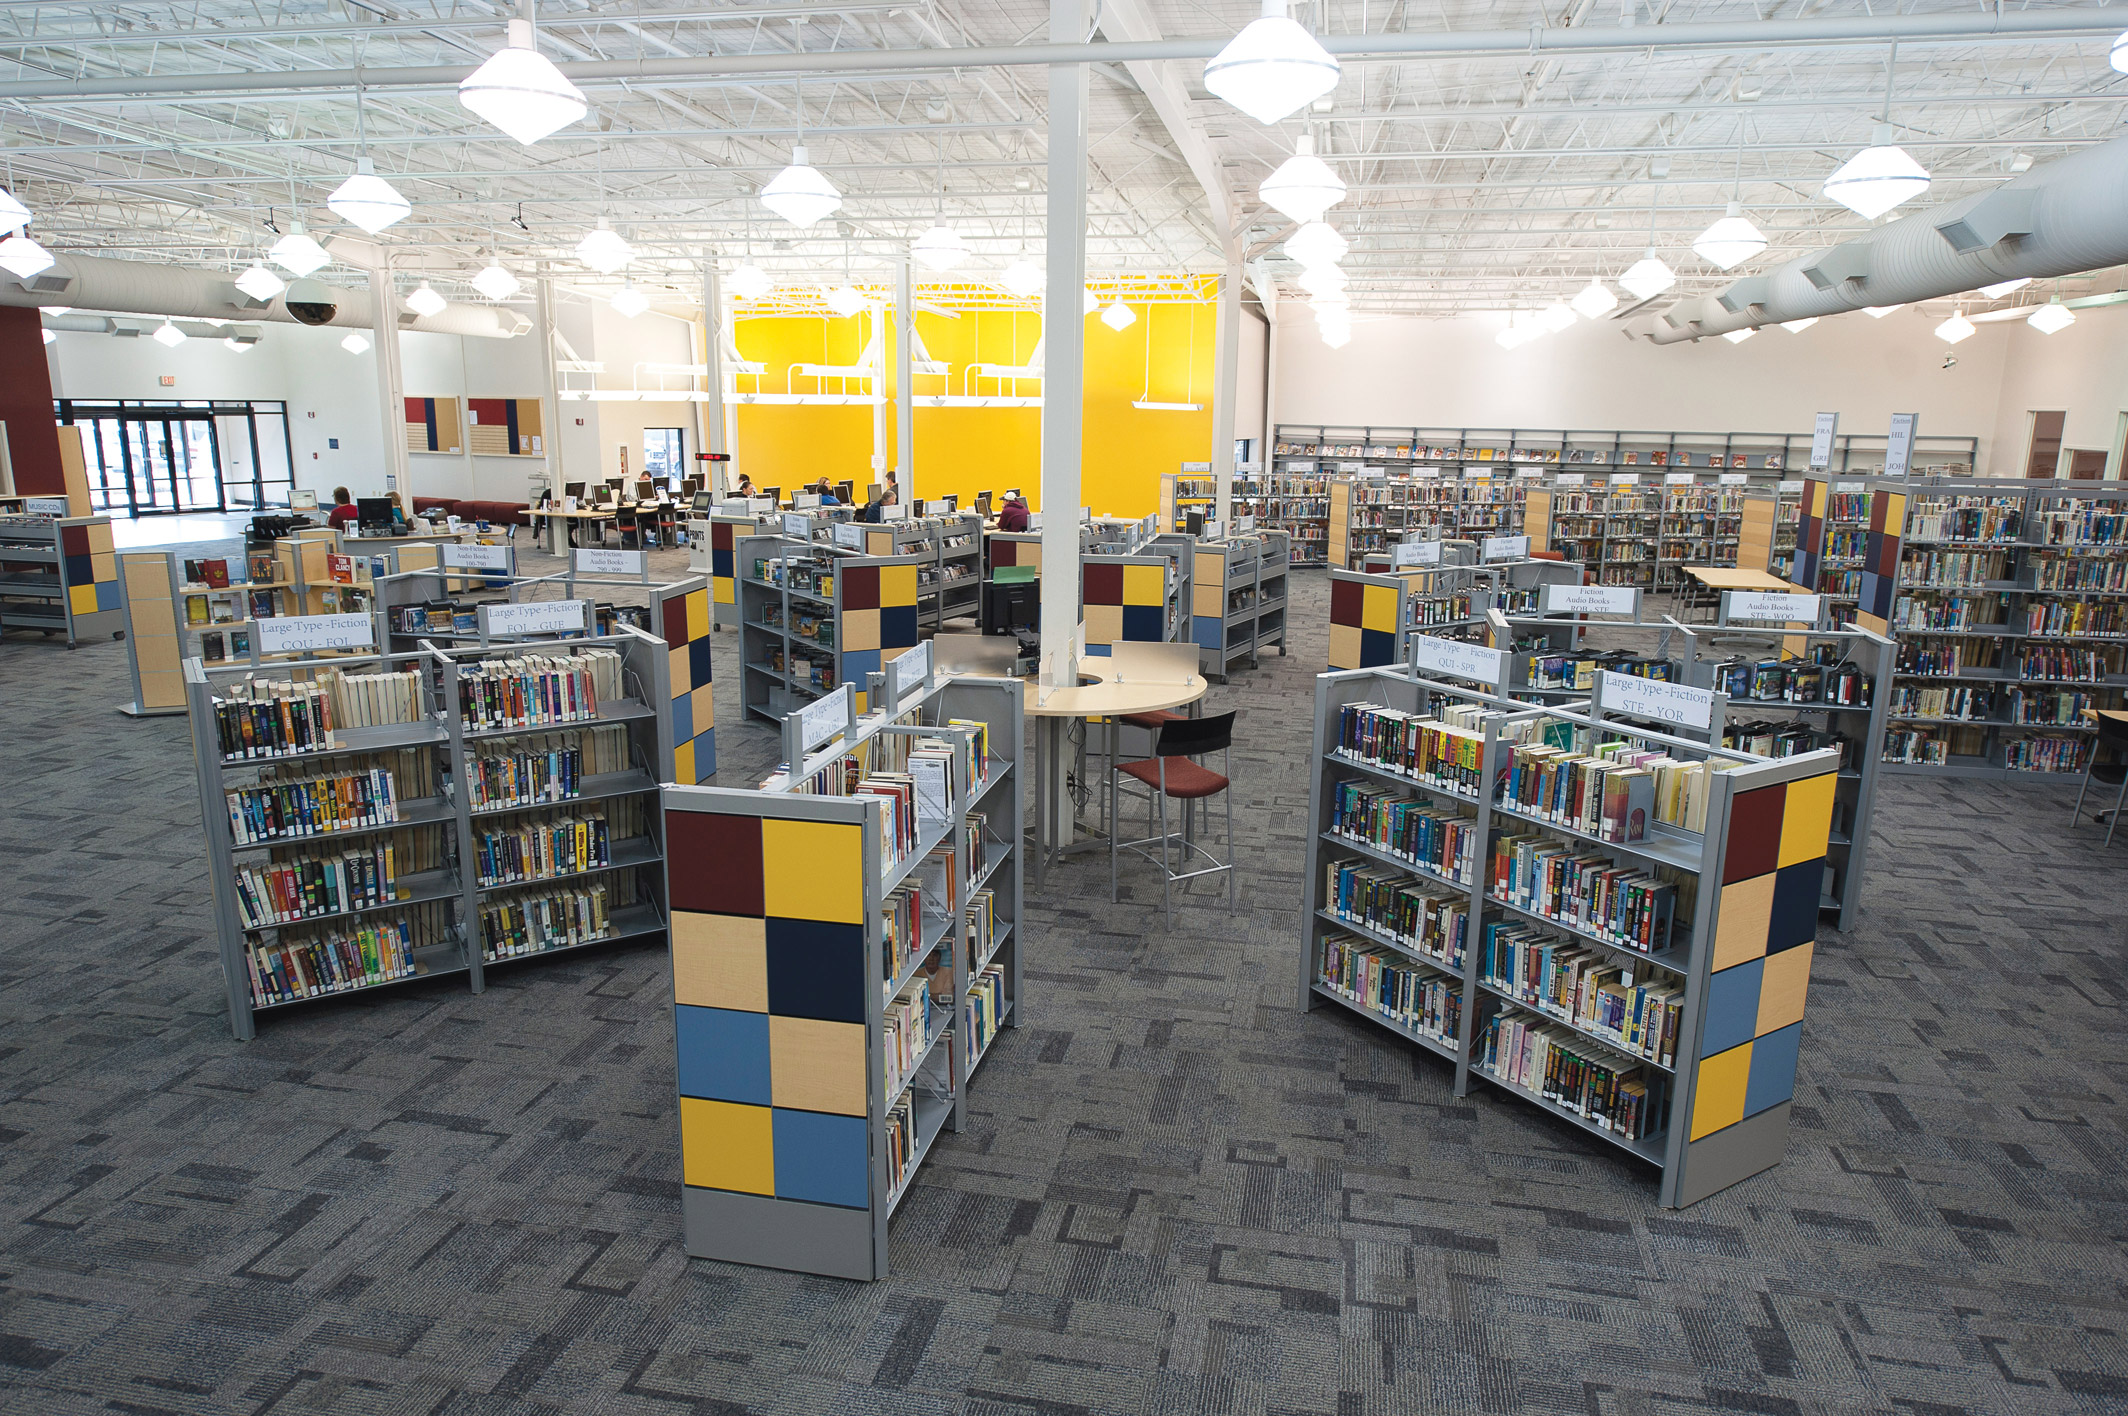 Jennings County Public Library, IN